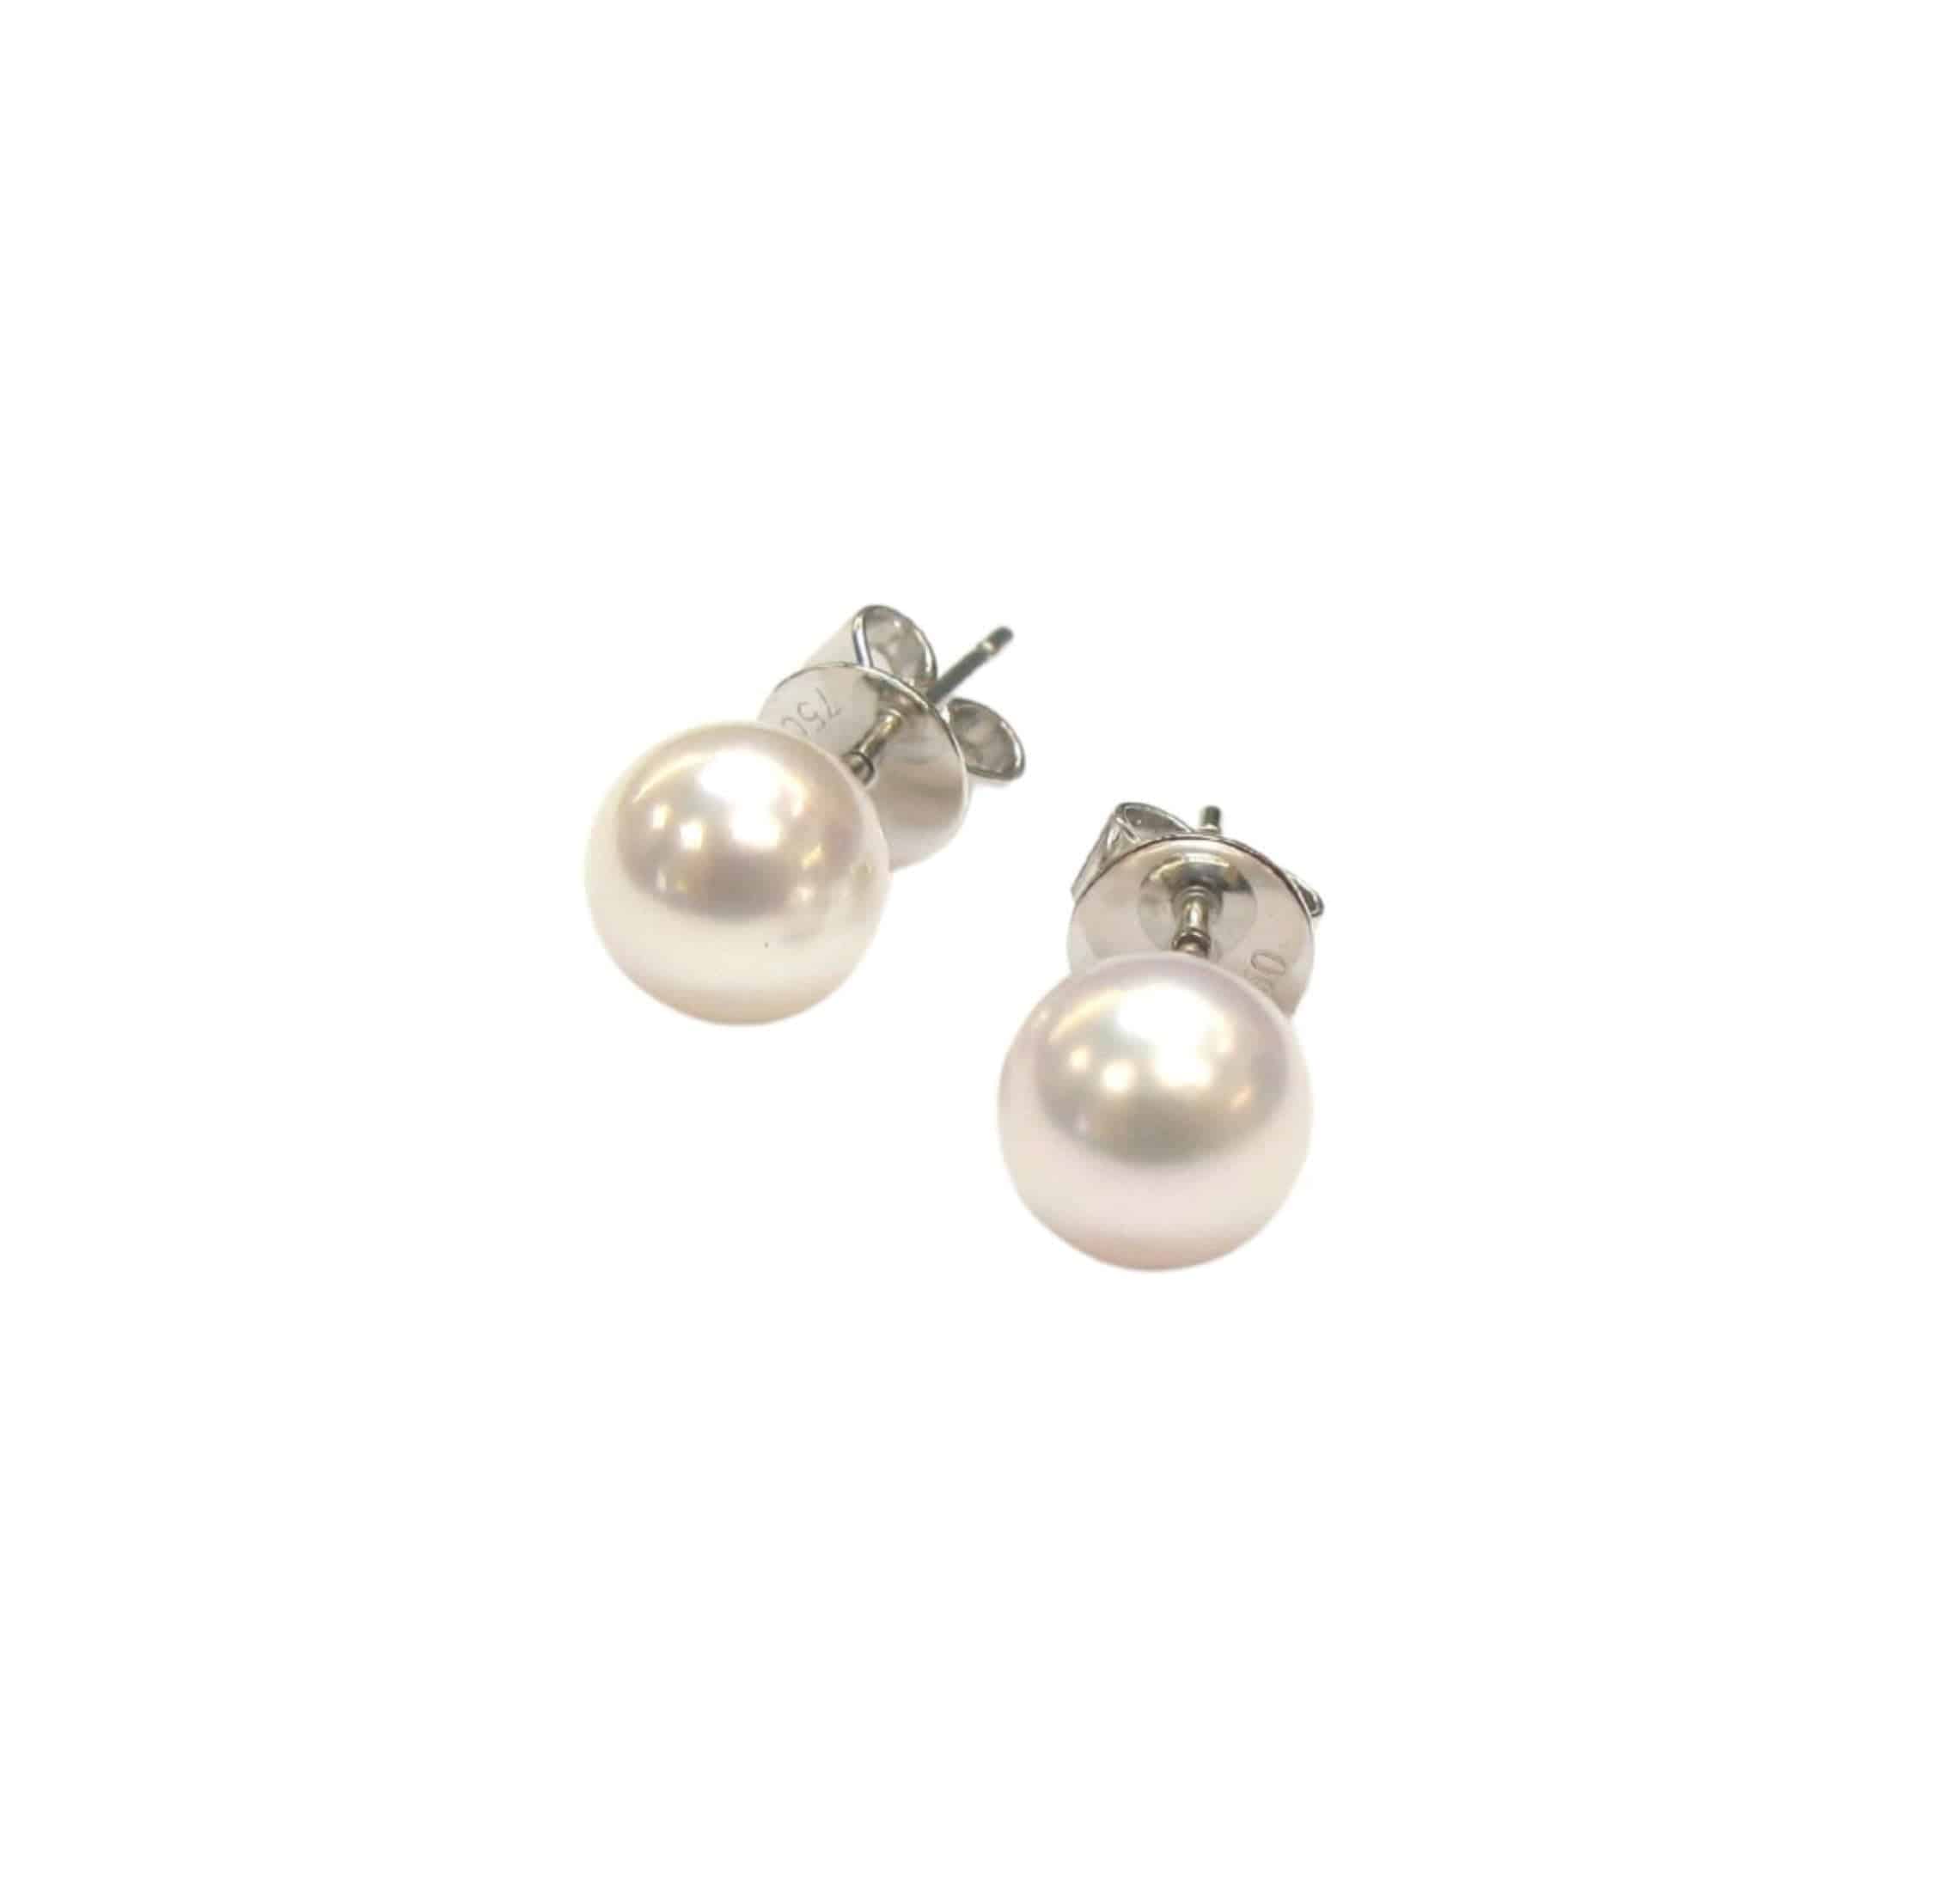 japanese-cultured-pearl-earrings-seo3922-43849365160100.jpg